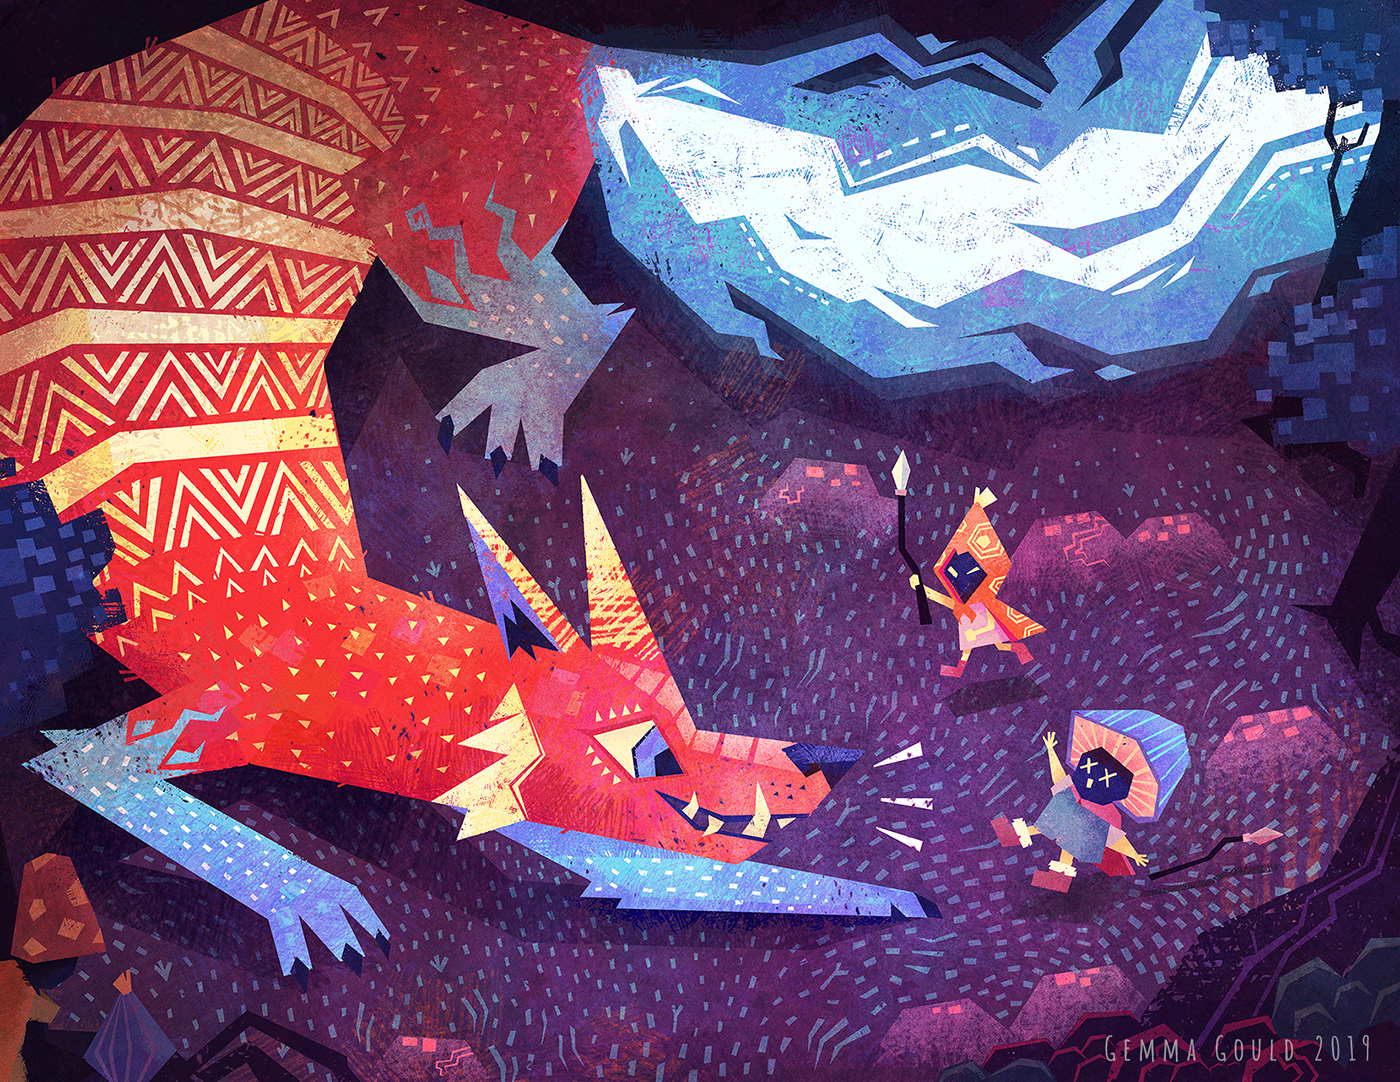 monster project gemma gould wolf monster imagination colorful geometric dragon kidlit childrens art